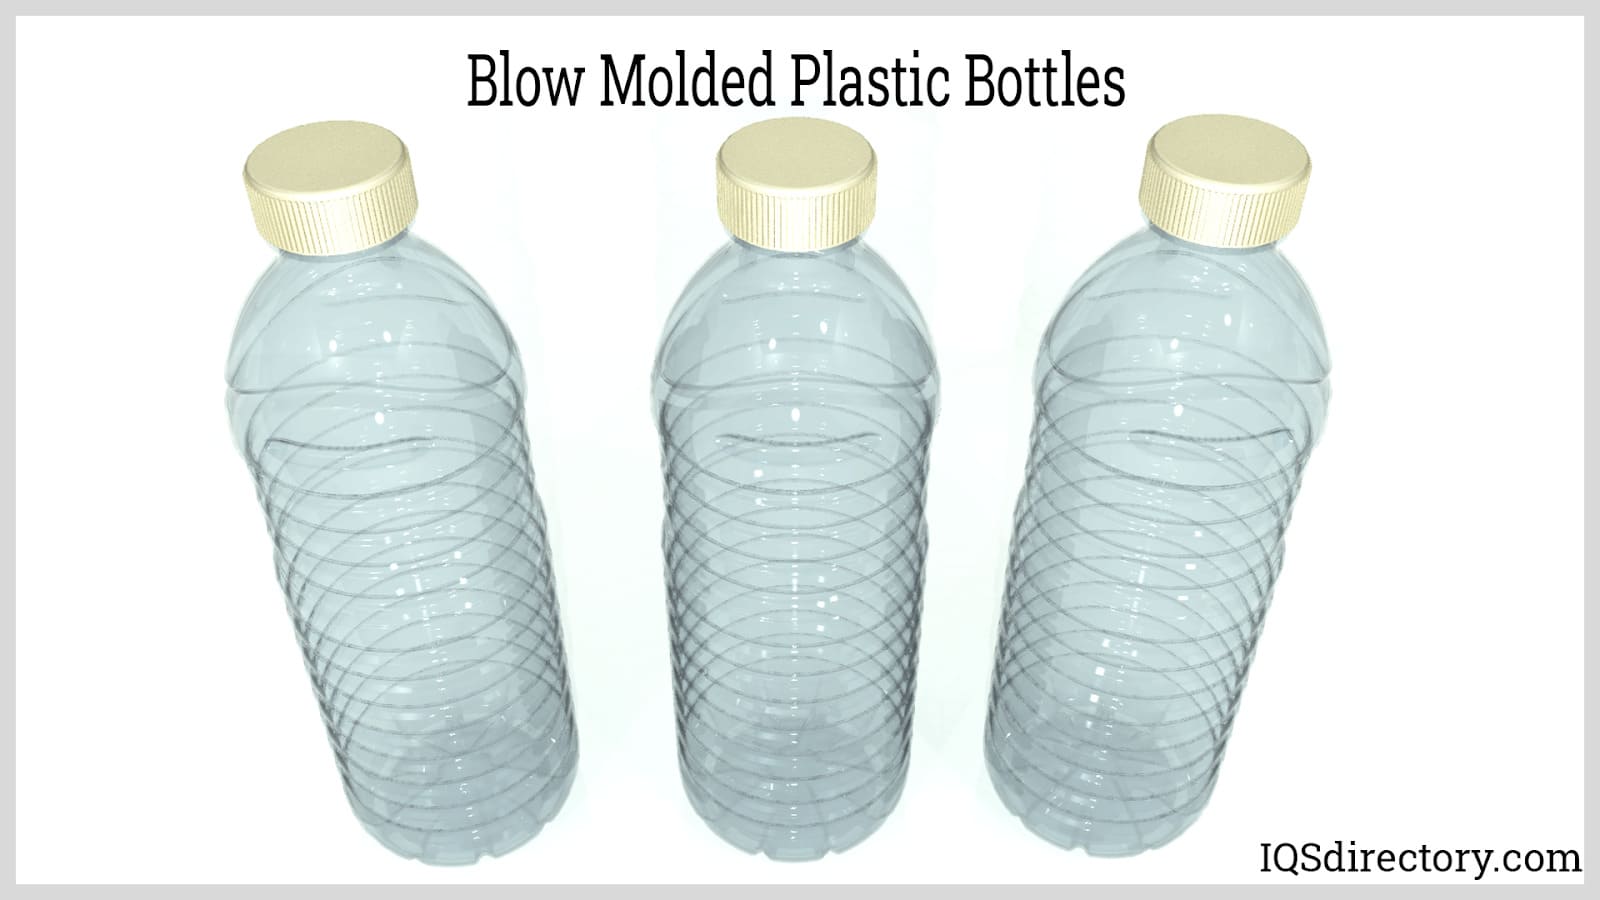 https://www.iqsdirectory.com/articles/blow-molding/blow-molded-plastic-bottles.jpg